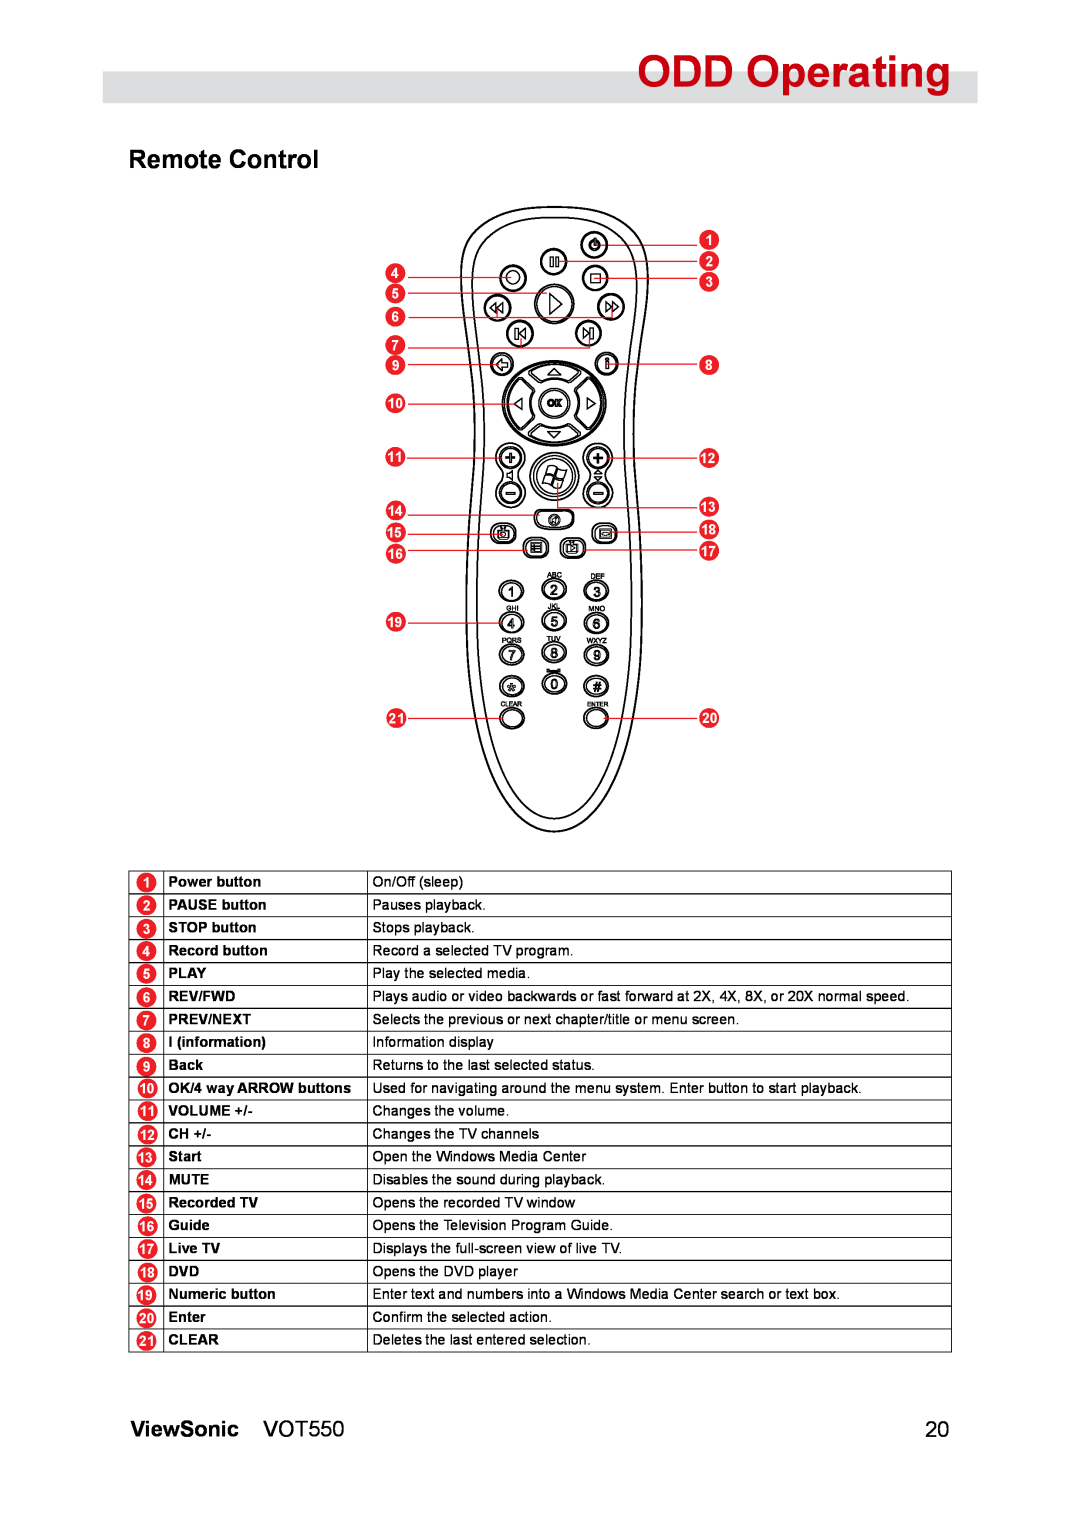 ViewSonic Remote Control, ODD Operating, ViewSonic VOT550, Volume +, Ch +, Start, Mute, Recorded TV, Guide, Live TV 